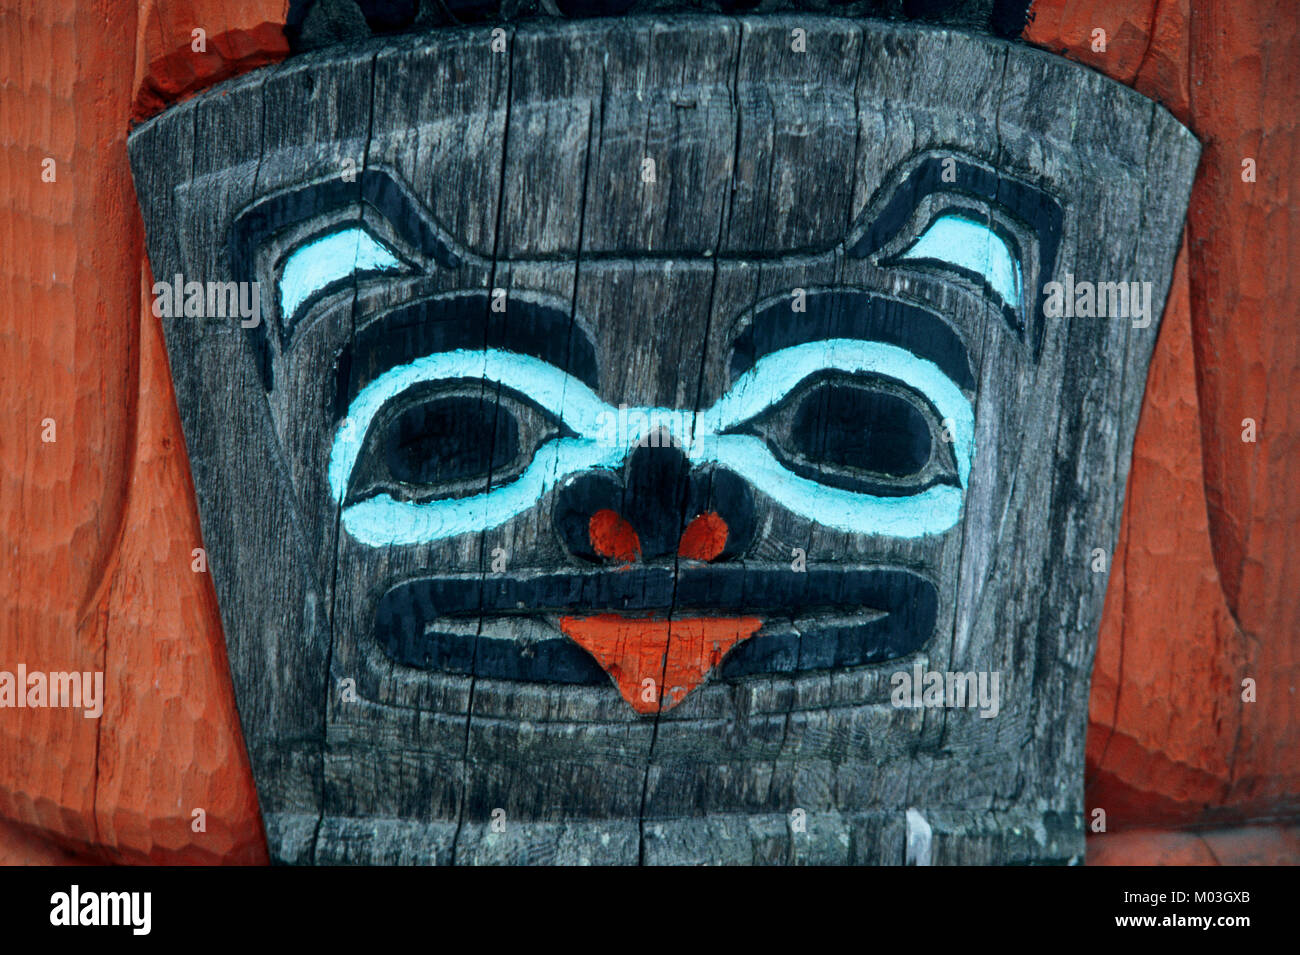 Detail of Tlingit Totem Pole, Haines, Alaska, USA / Tlingit Indians | Detail eines Totempfahls der Tlingit-Indianer an Hauswand, Haines, Alaska, USA Stock Photo